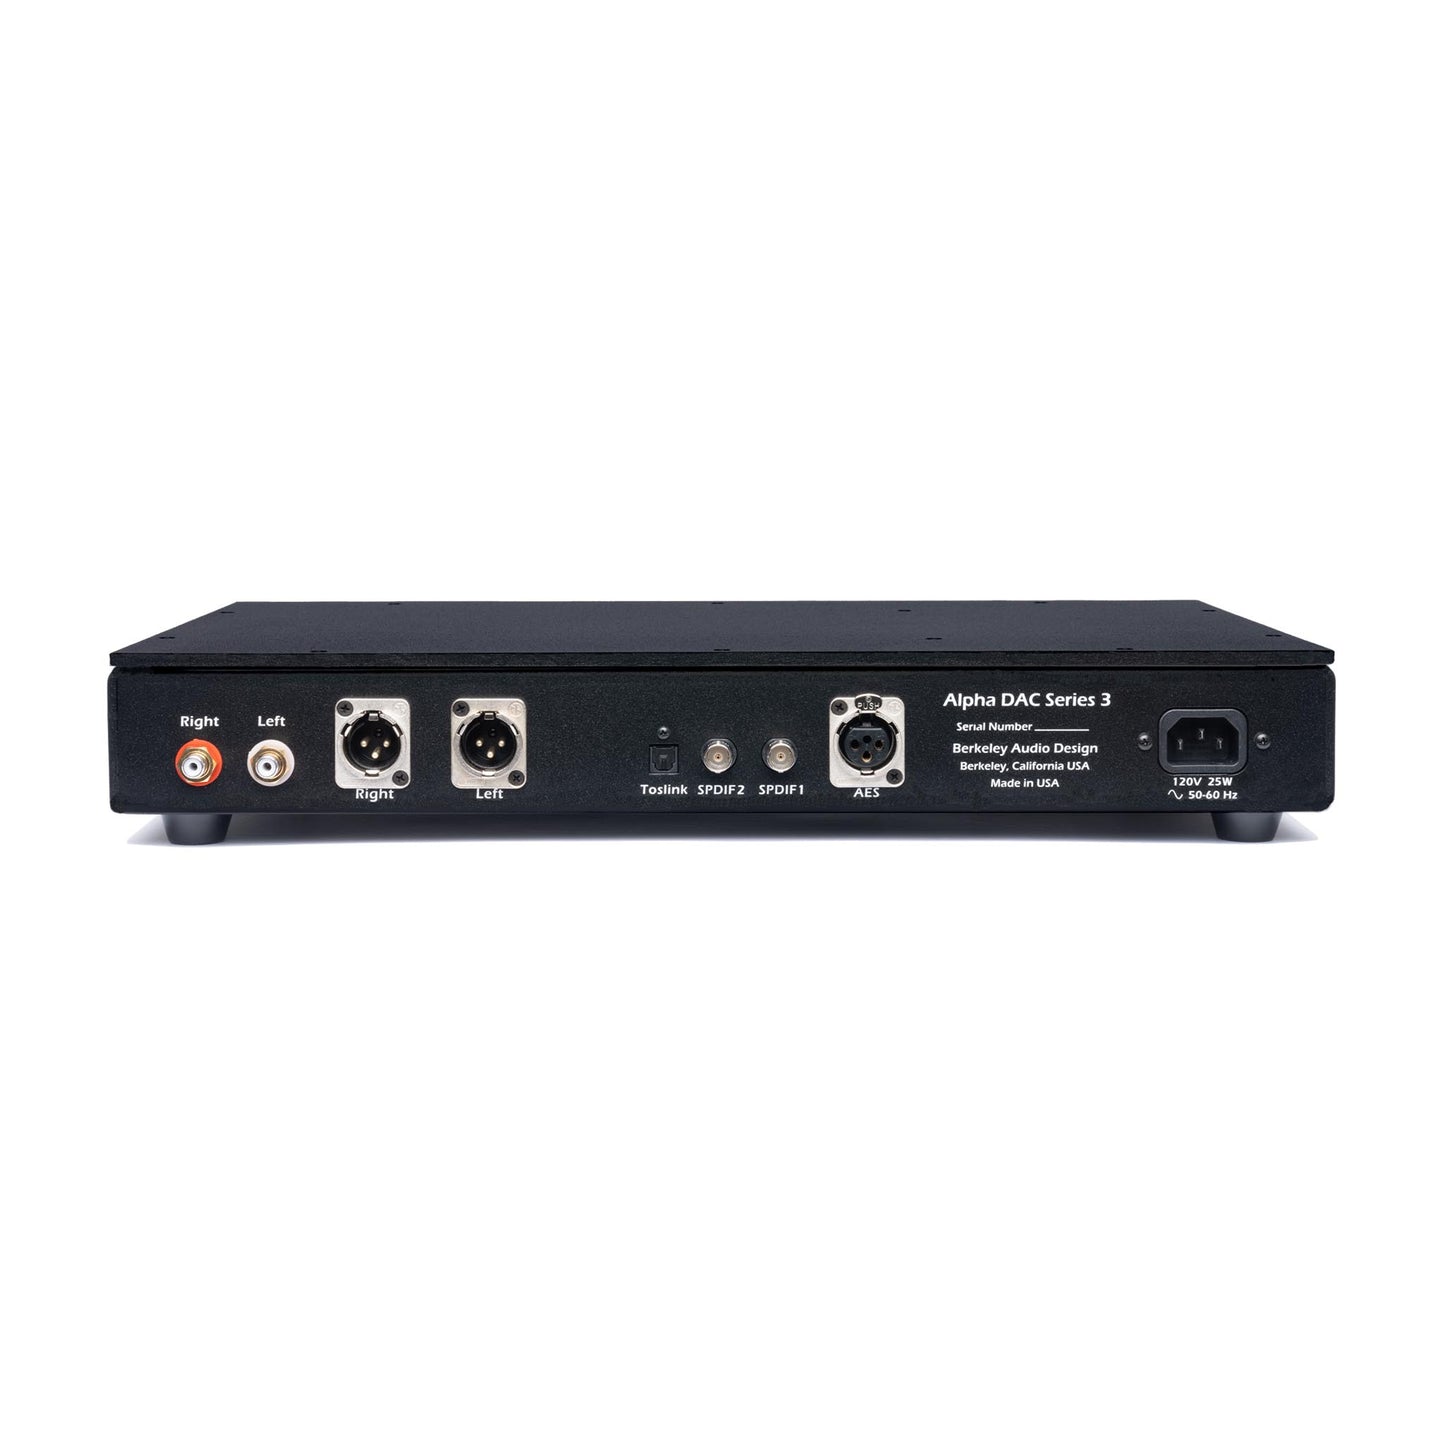 Berkeley Audio Design Alpha DAC Series 3 Digital to Analog Converter